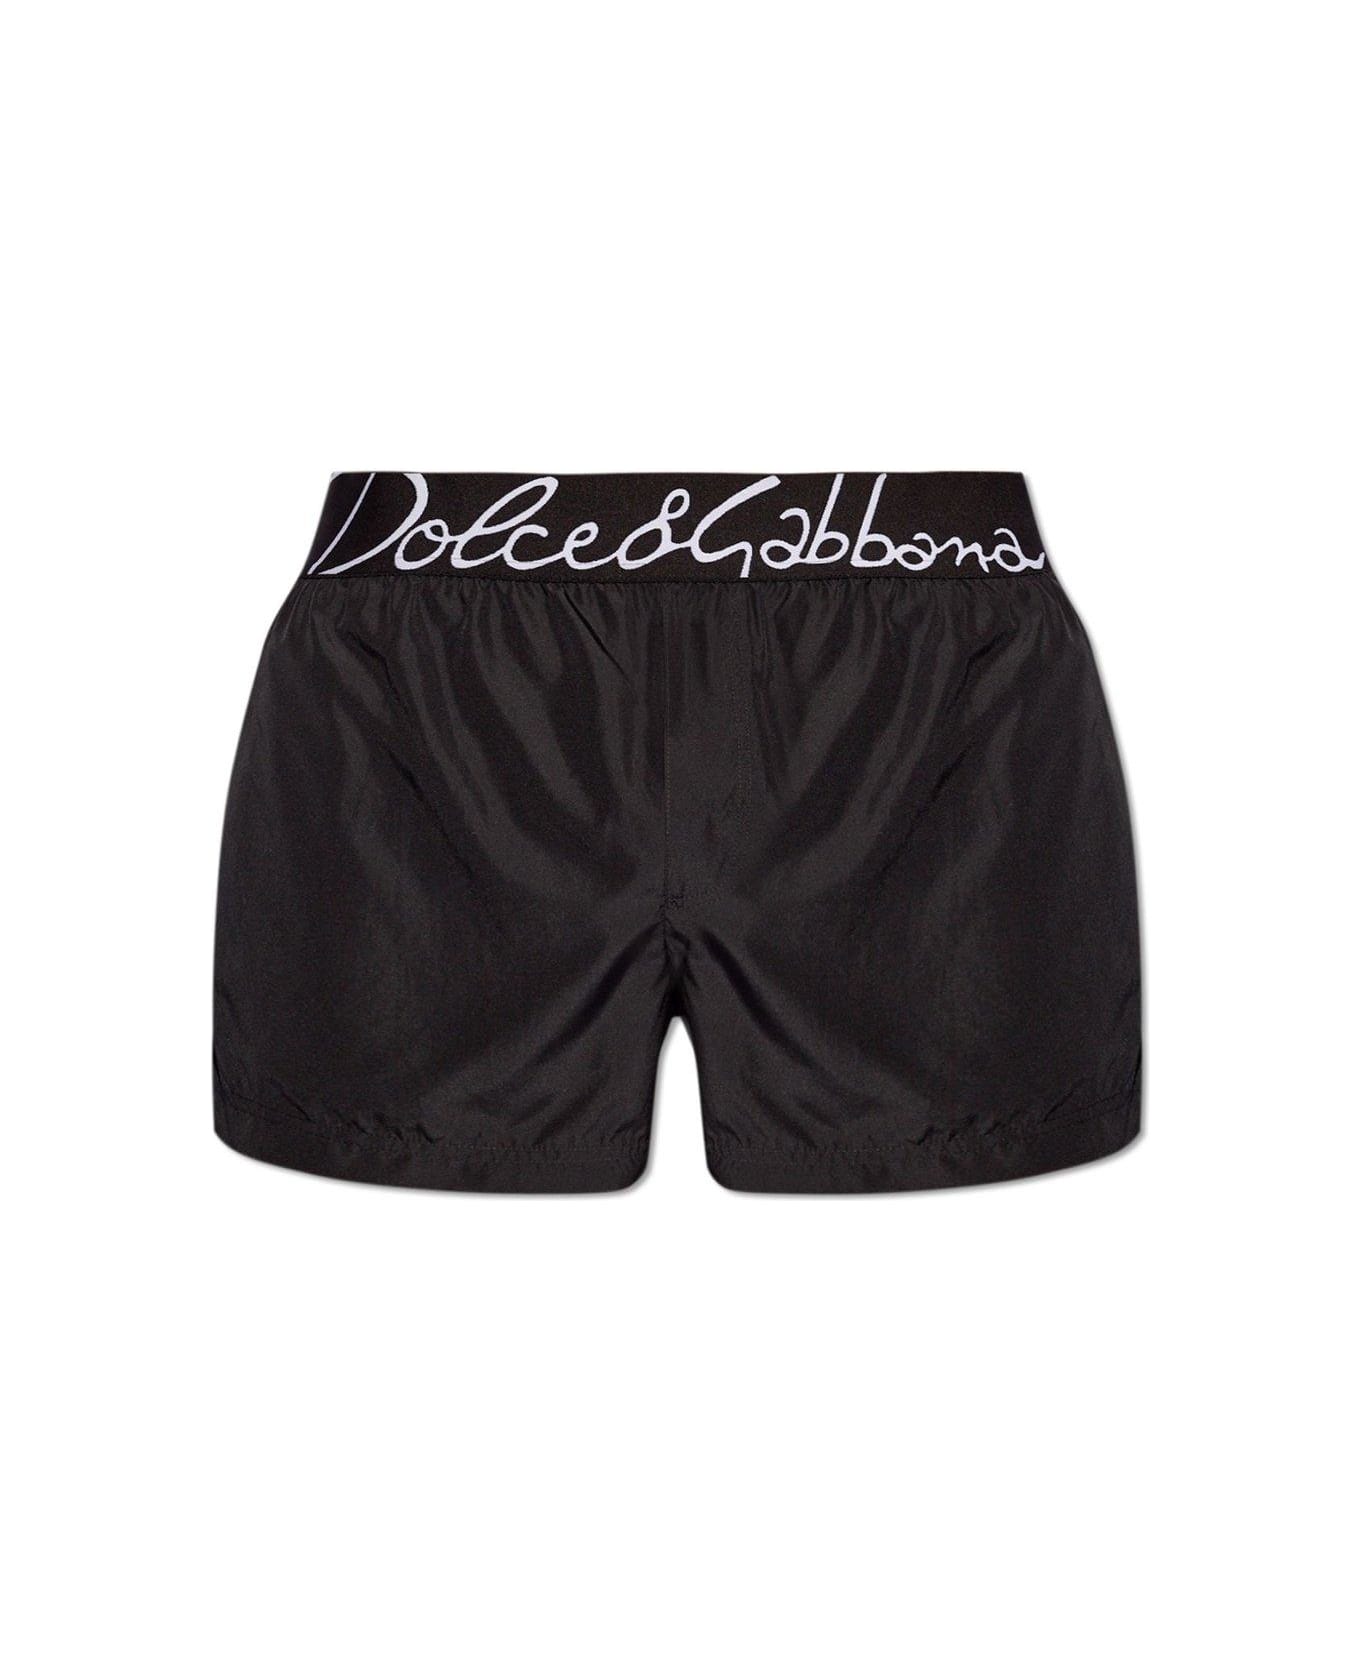 Dolce & Gabbana Swim Trunks - Nero